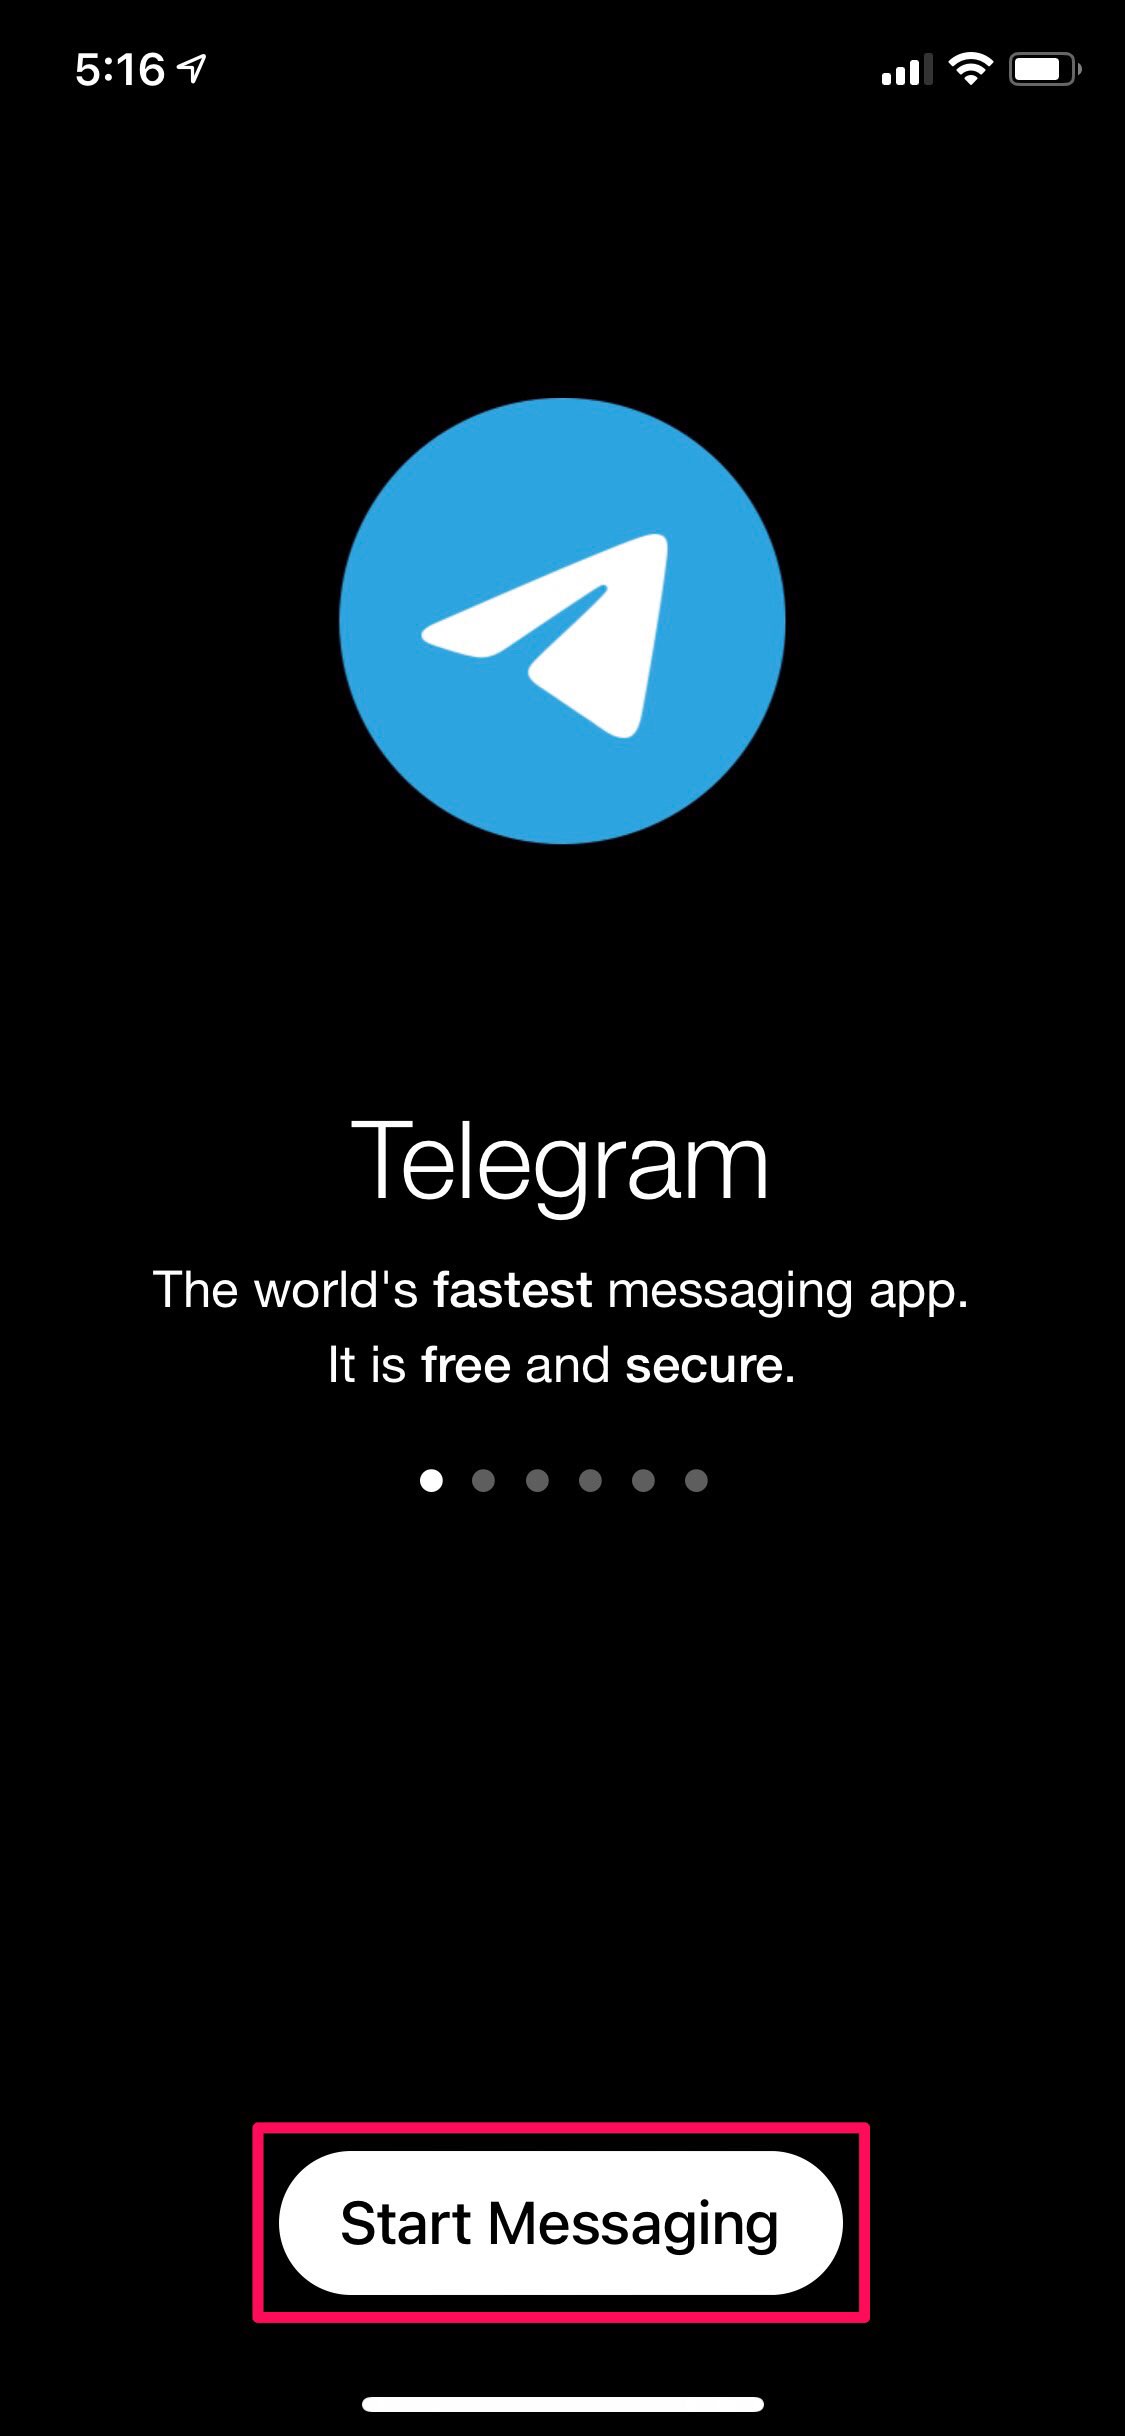 download and install telegram app